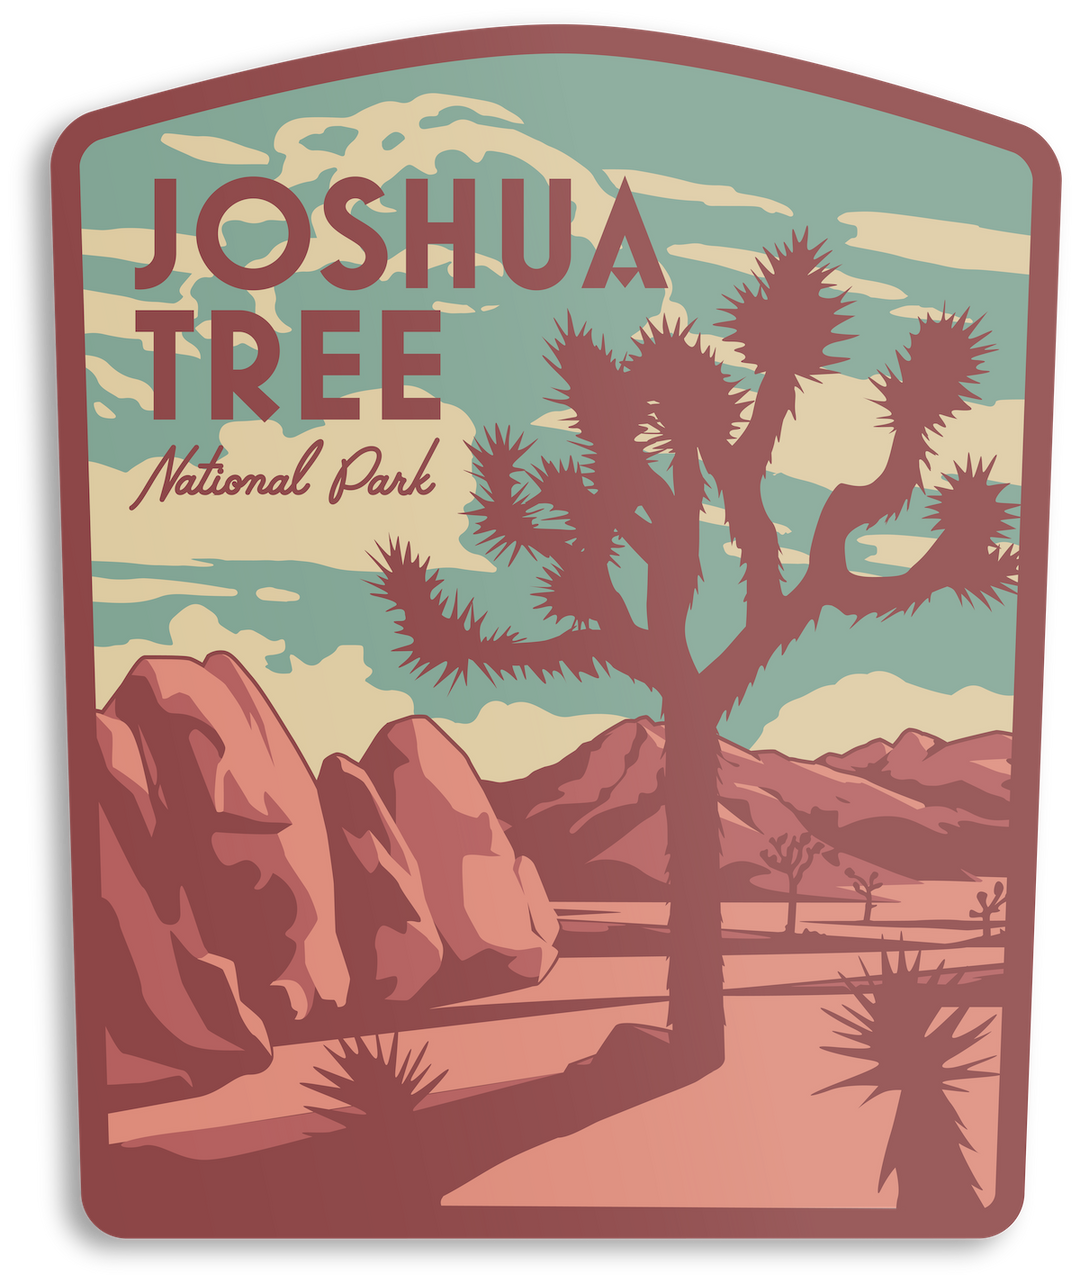 Joshua Tree National Park Sticker Sticker One Size 